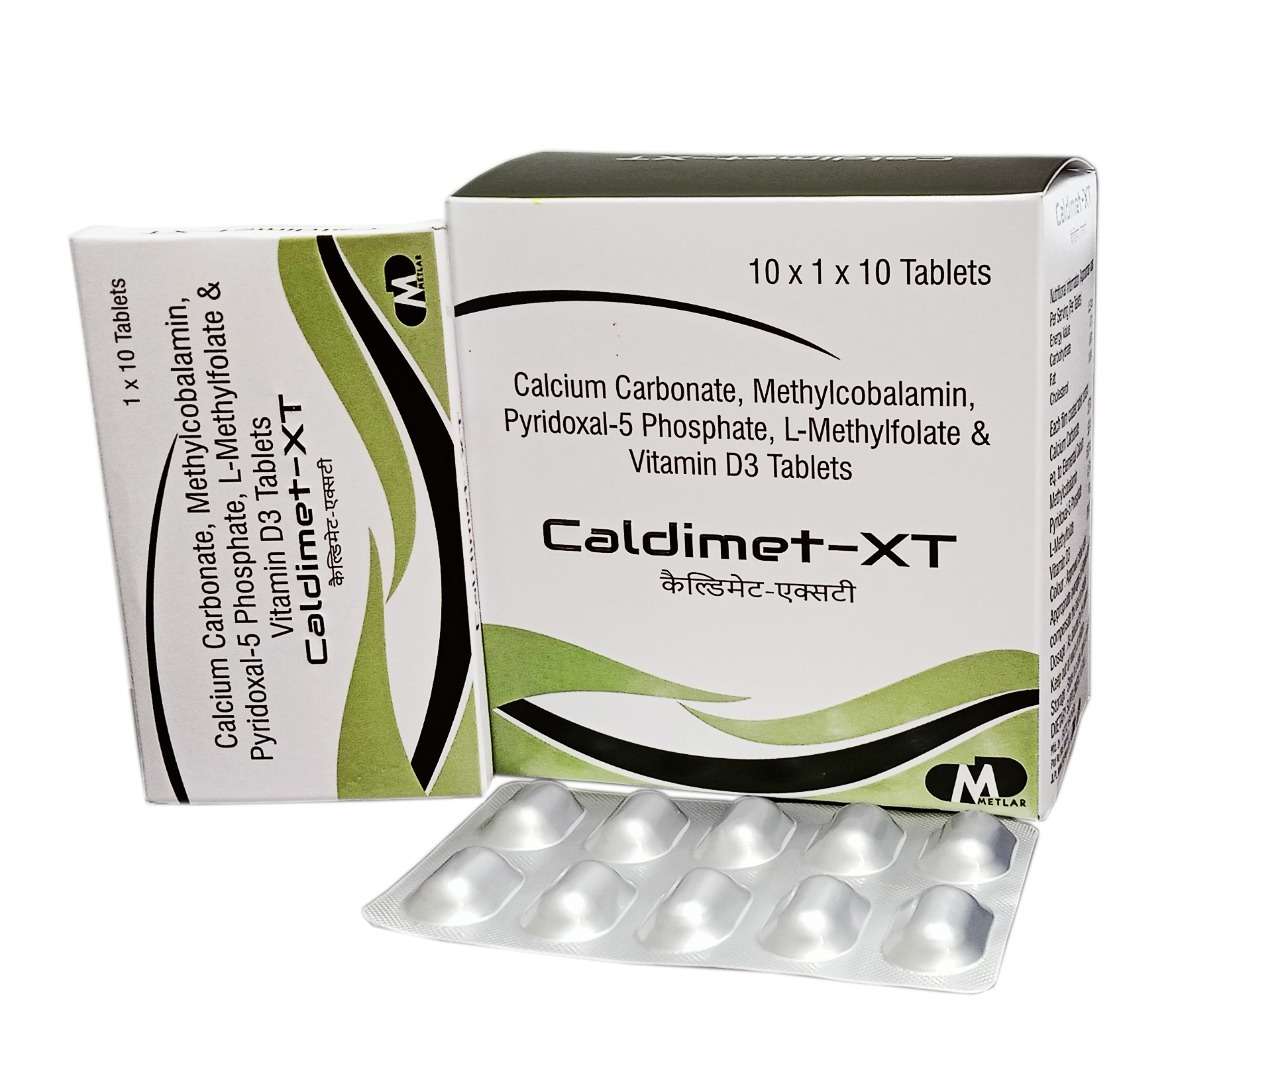 calcium carbonate,elemental calcium,methylcobalamin,vitamin d3,l- methylfolate calcium with pyridoxal-5- phosphate